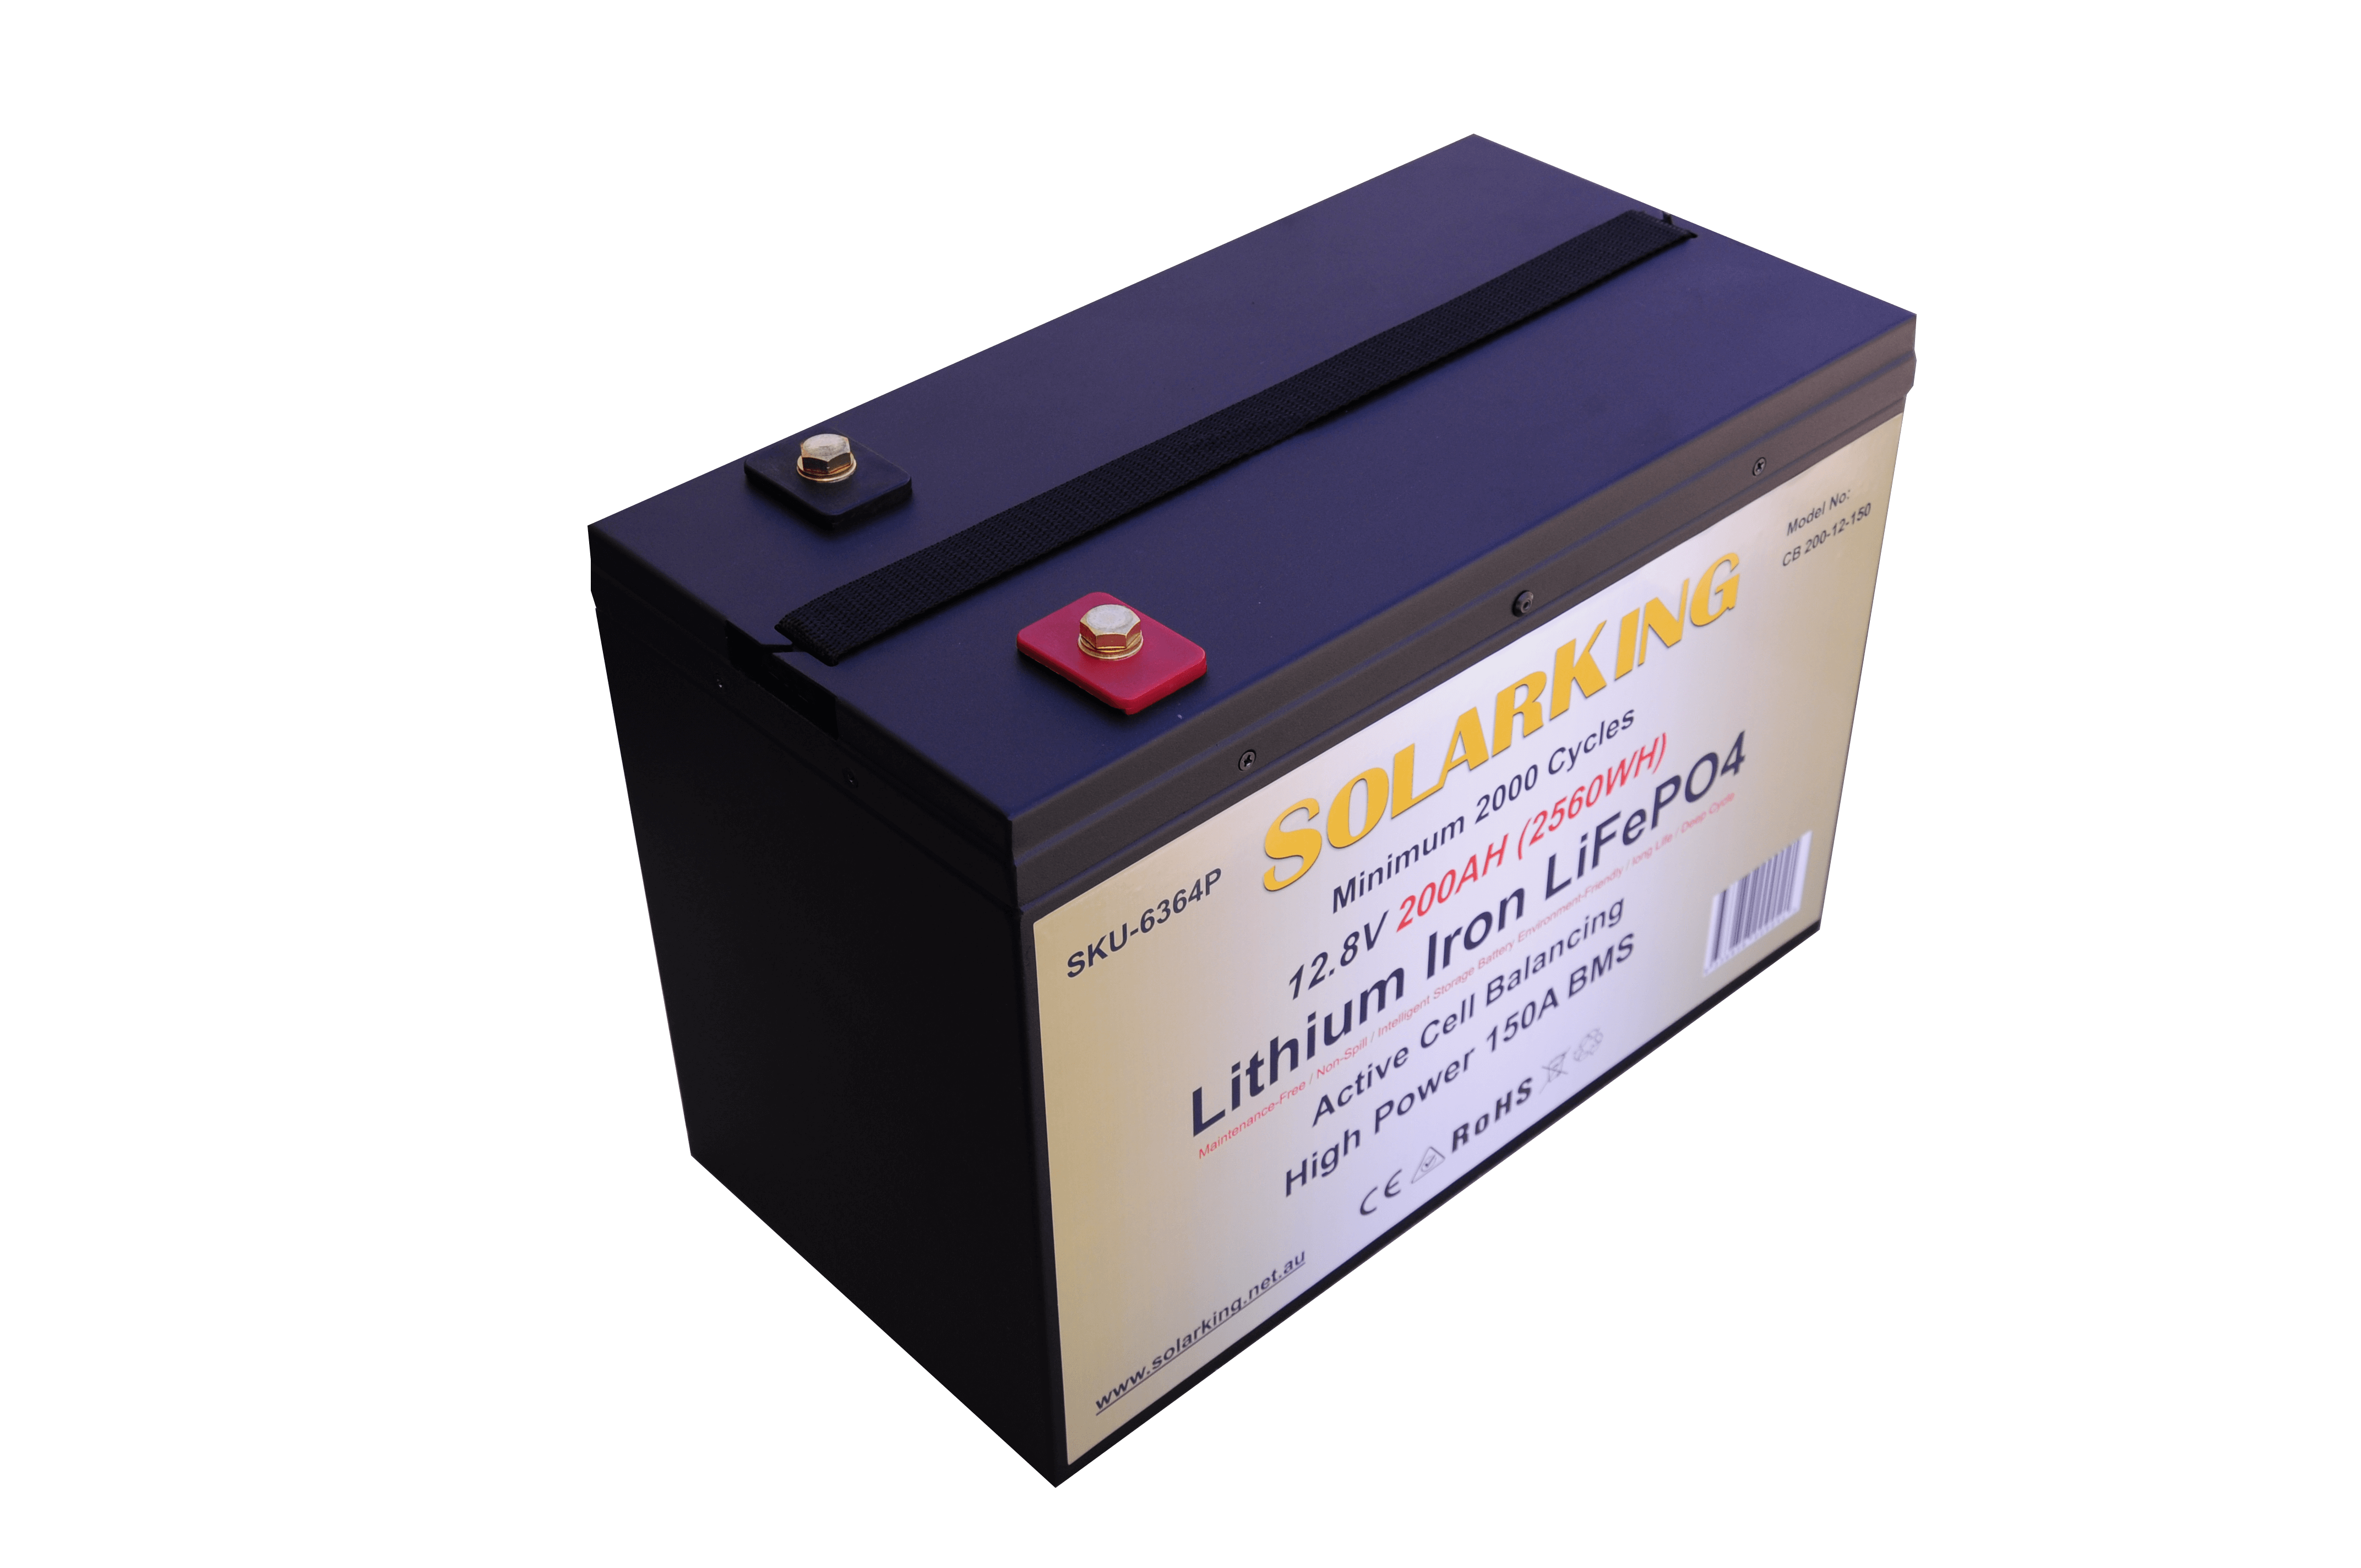 12.8V 200AH  Solarking Lithium Iron Battery Metal Case CB-200-12-150